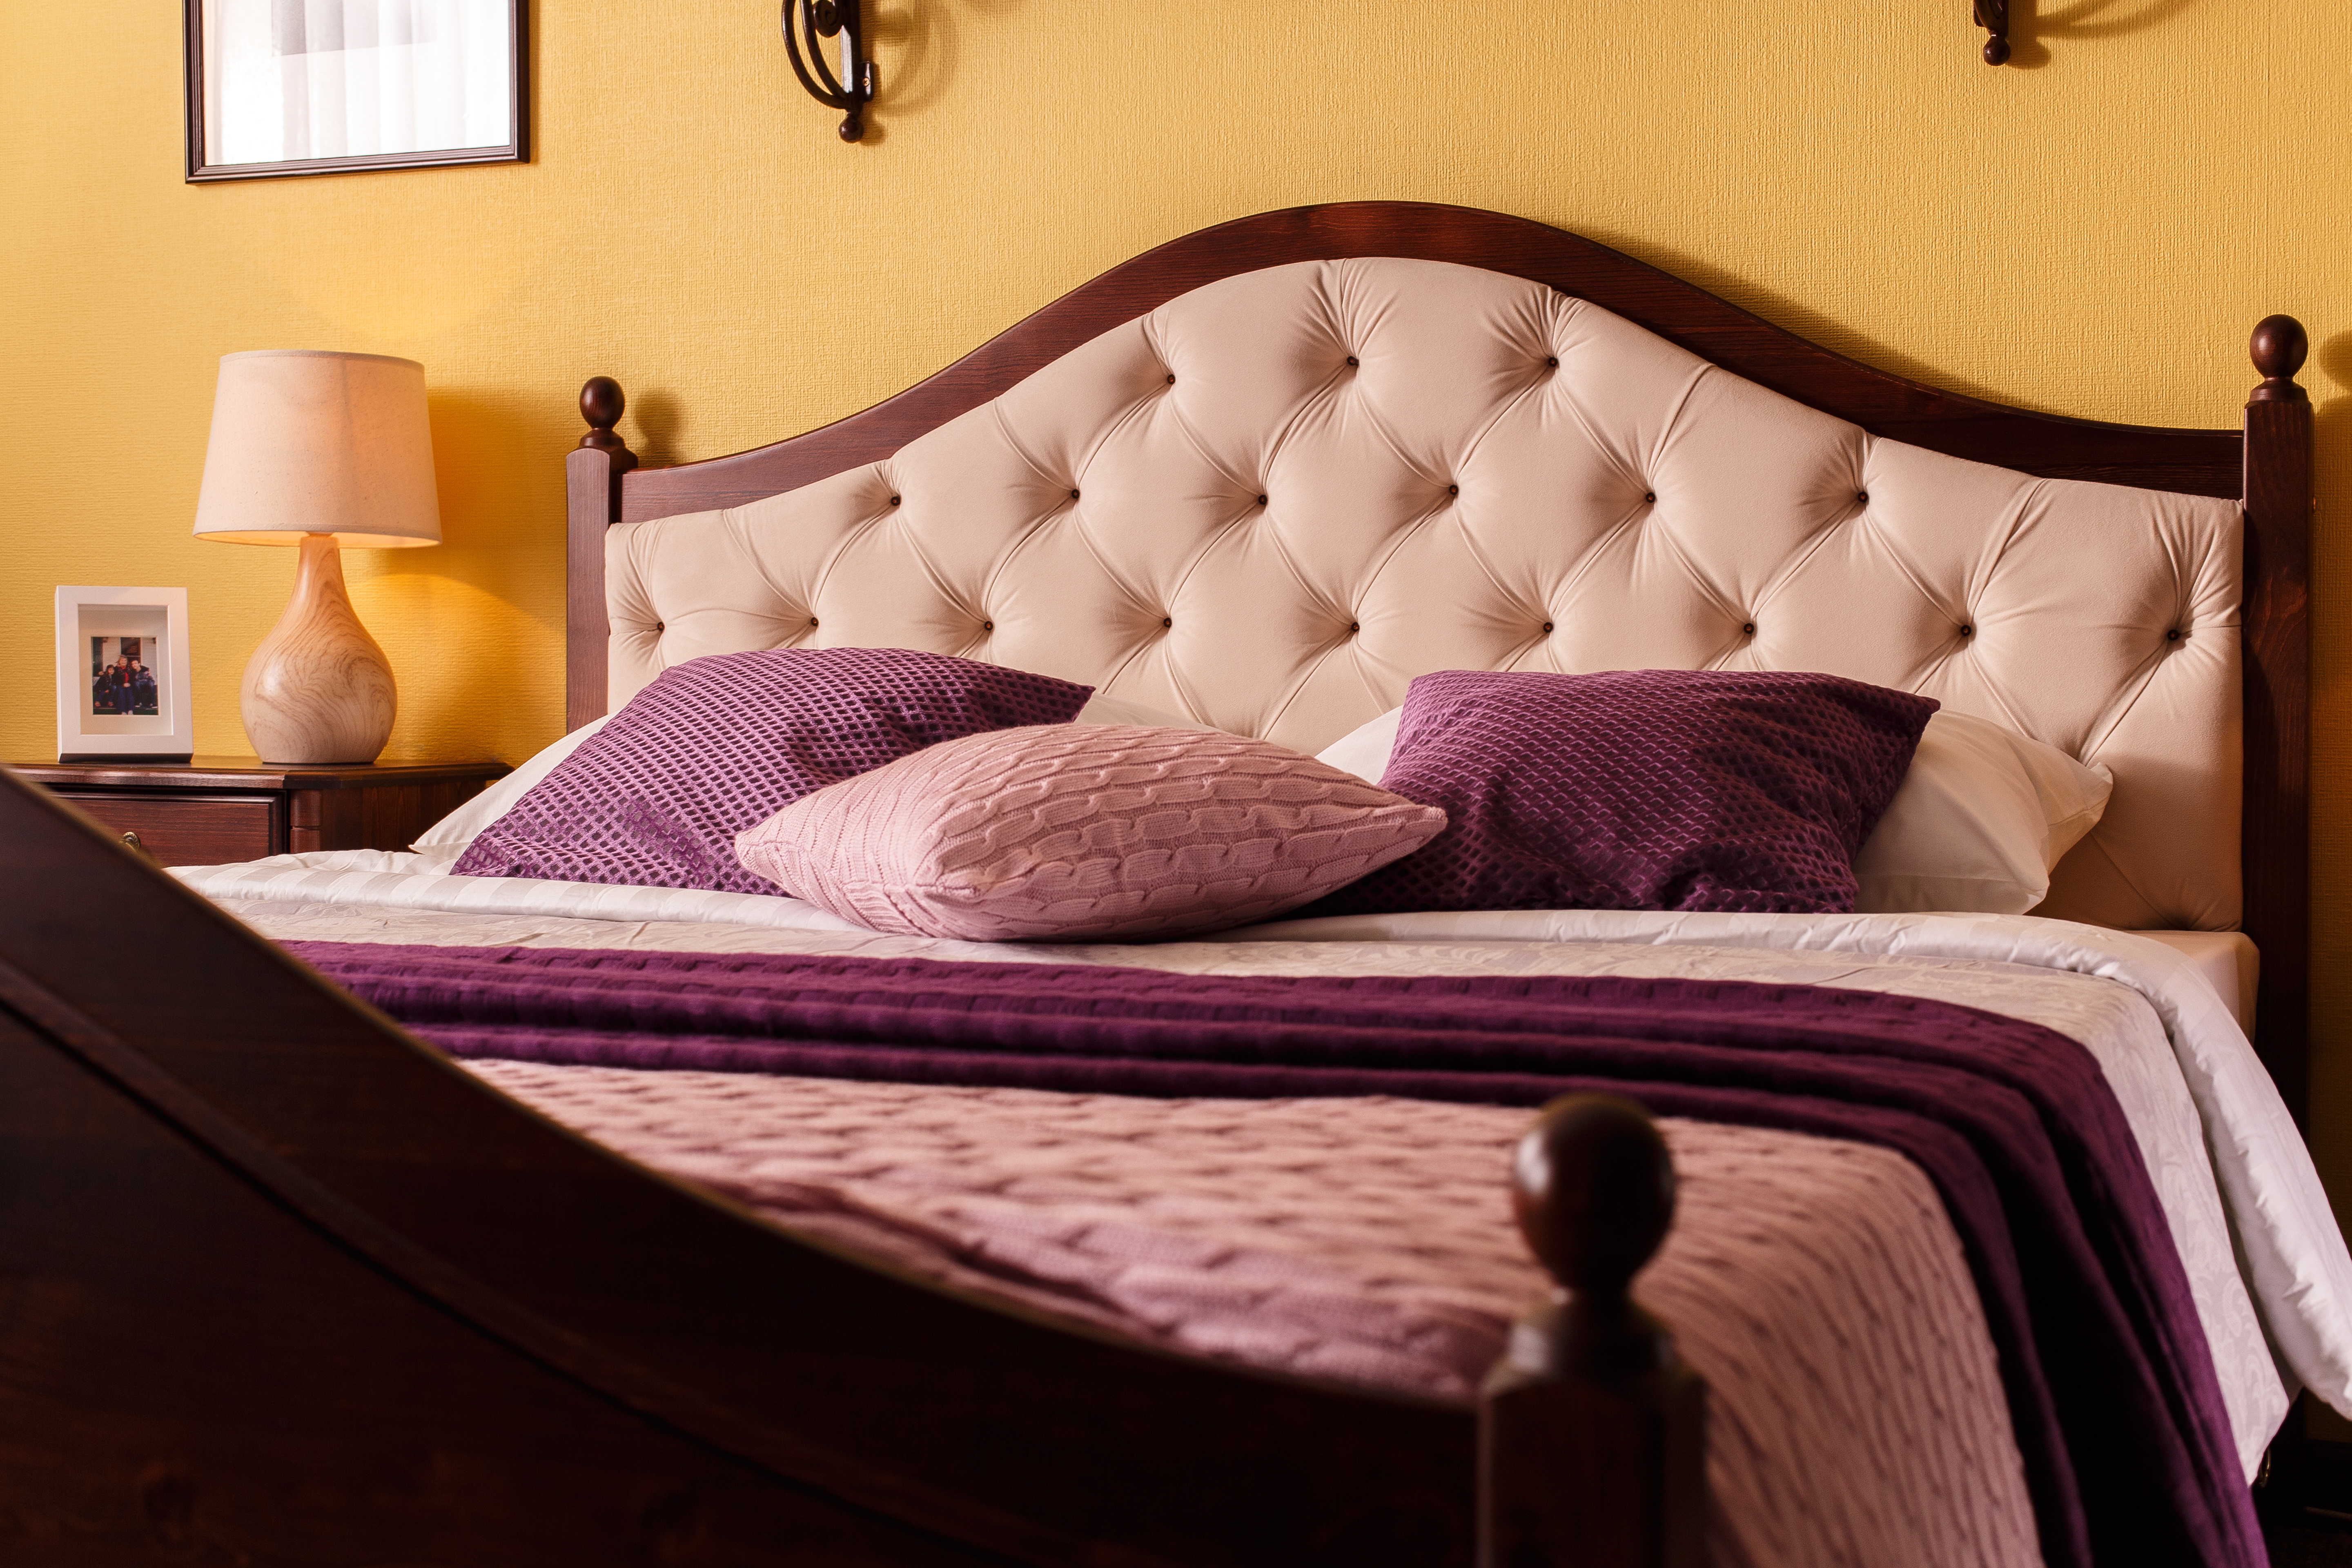 Кровати в двух цветах